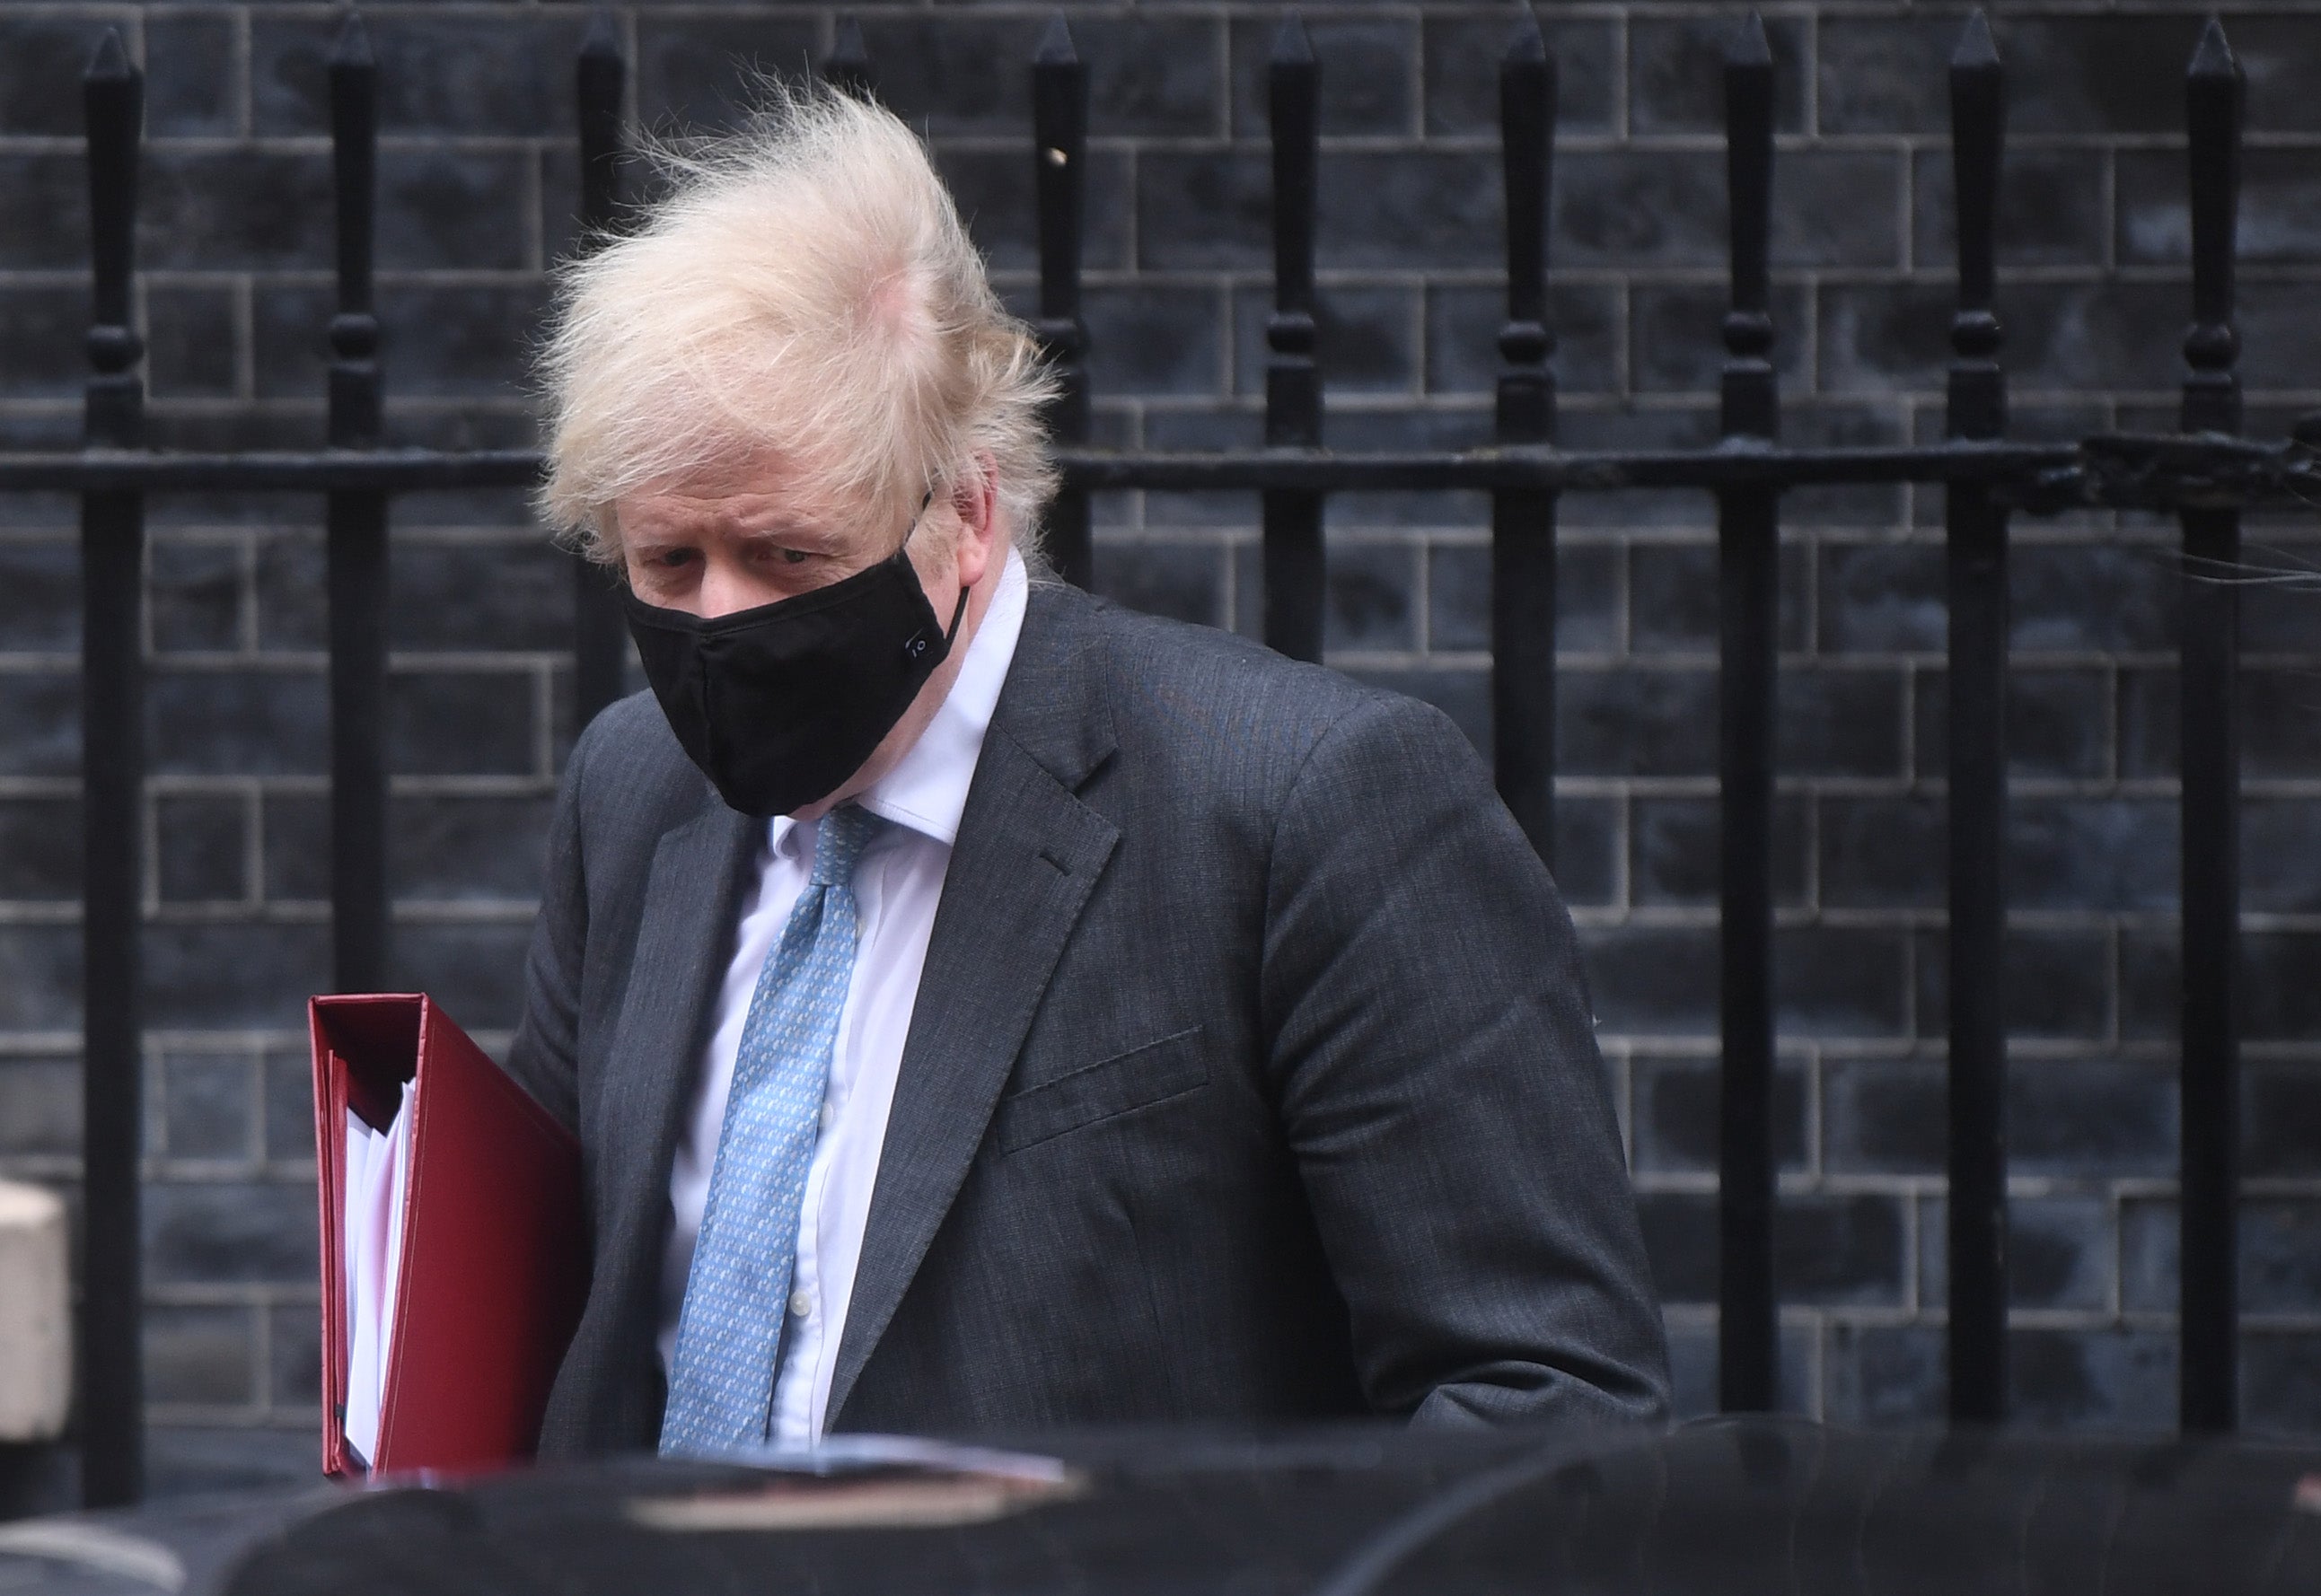 Boris Johnson has some thinking to do over lockdown